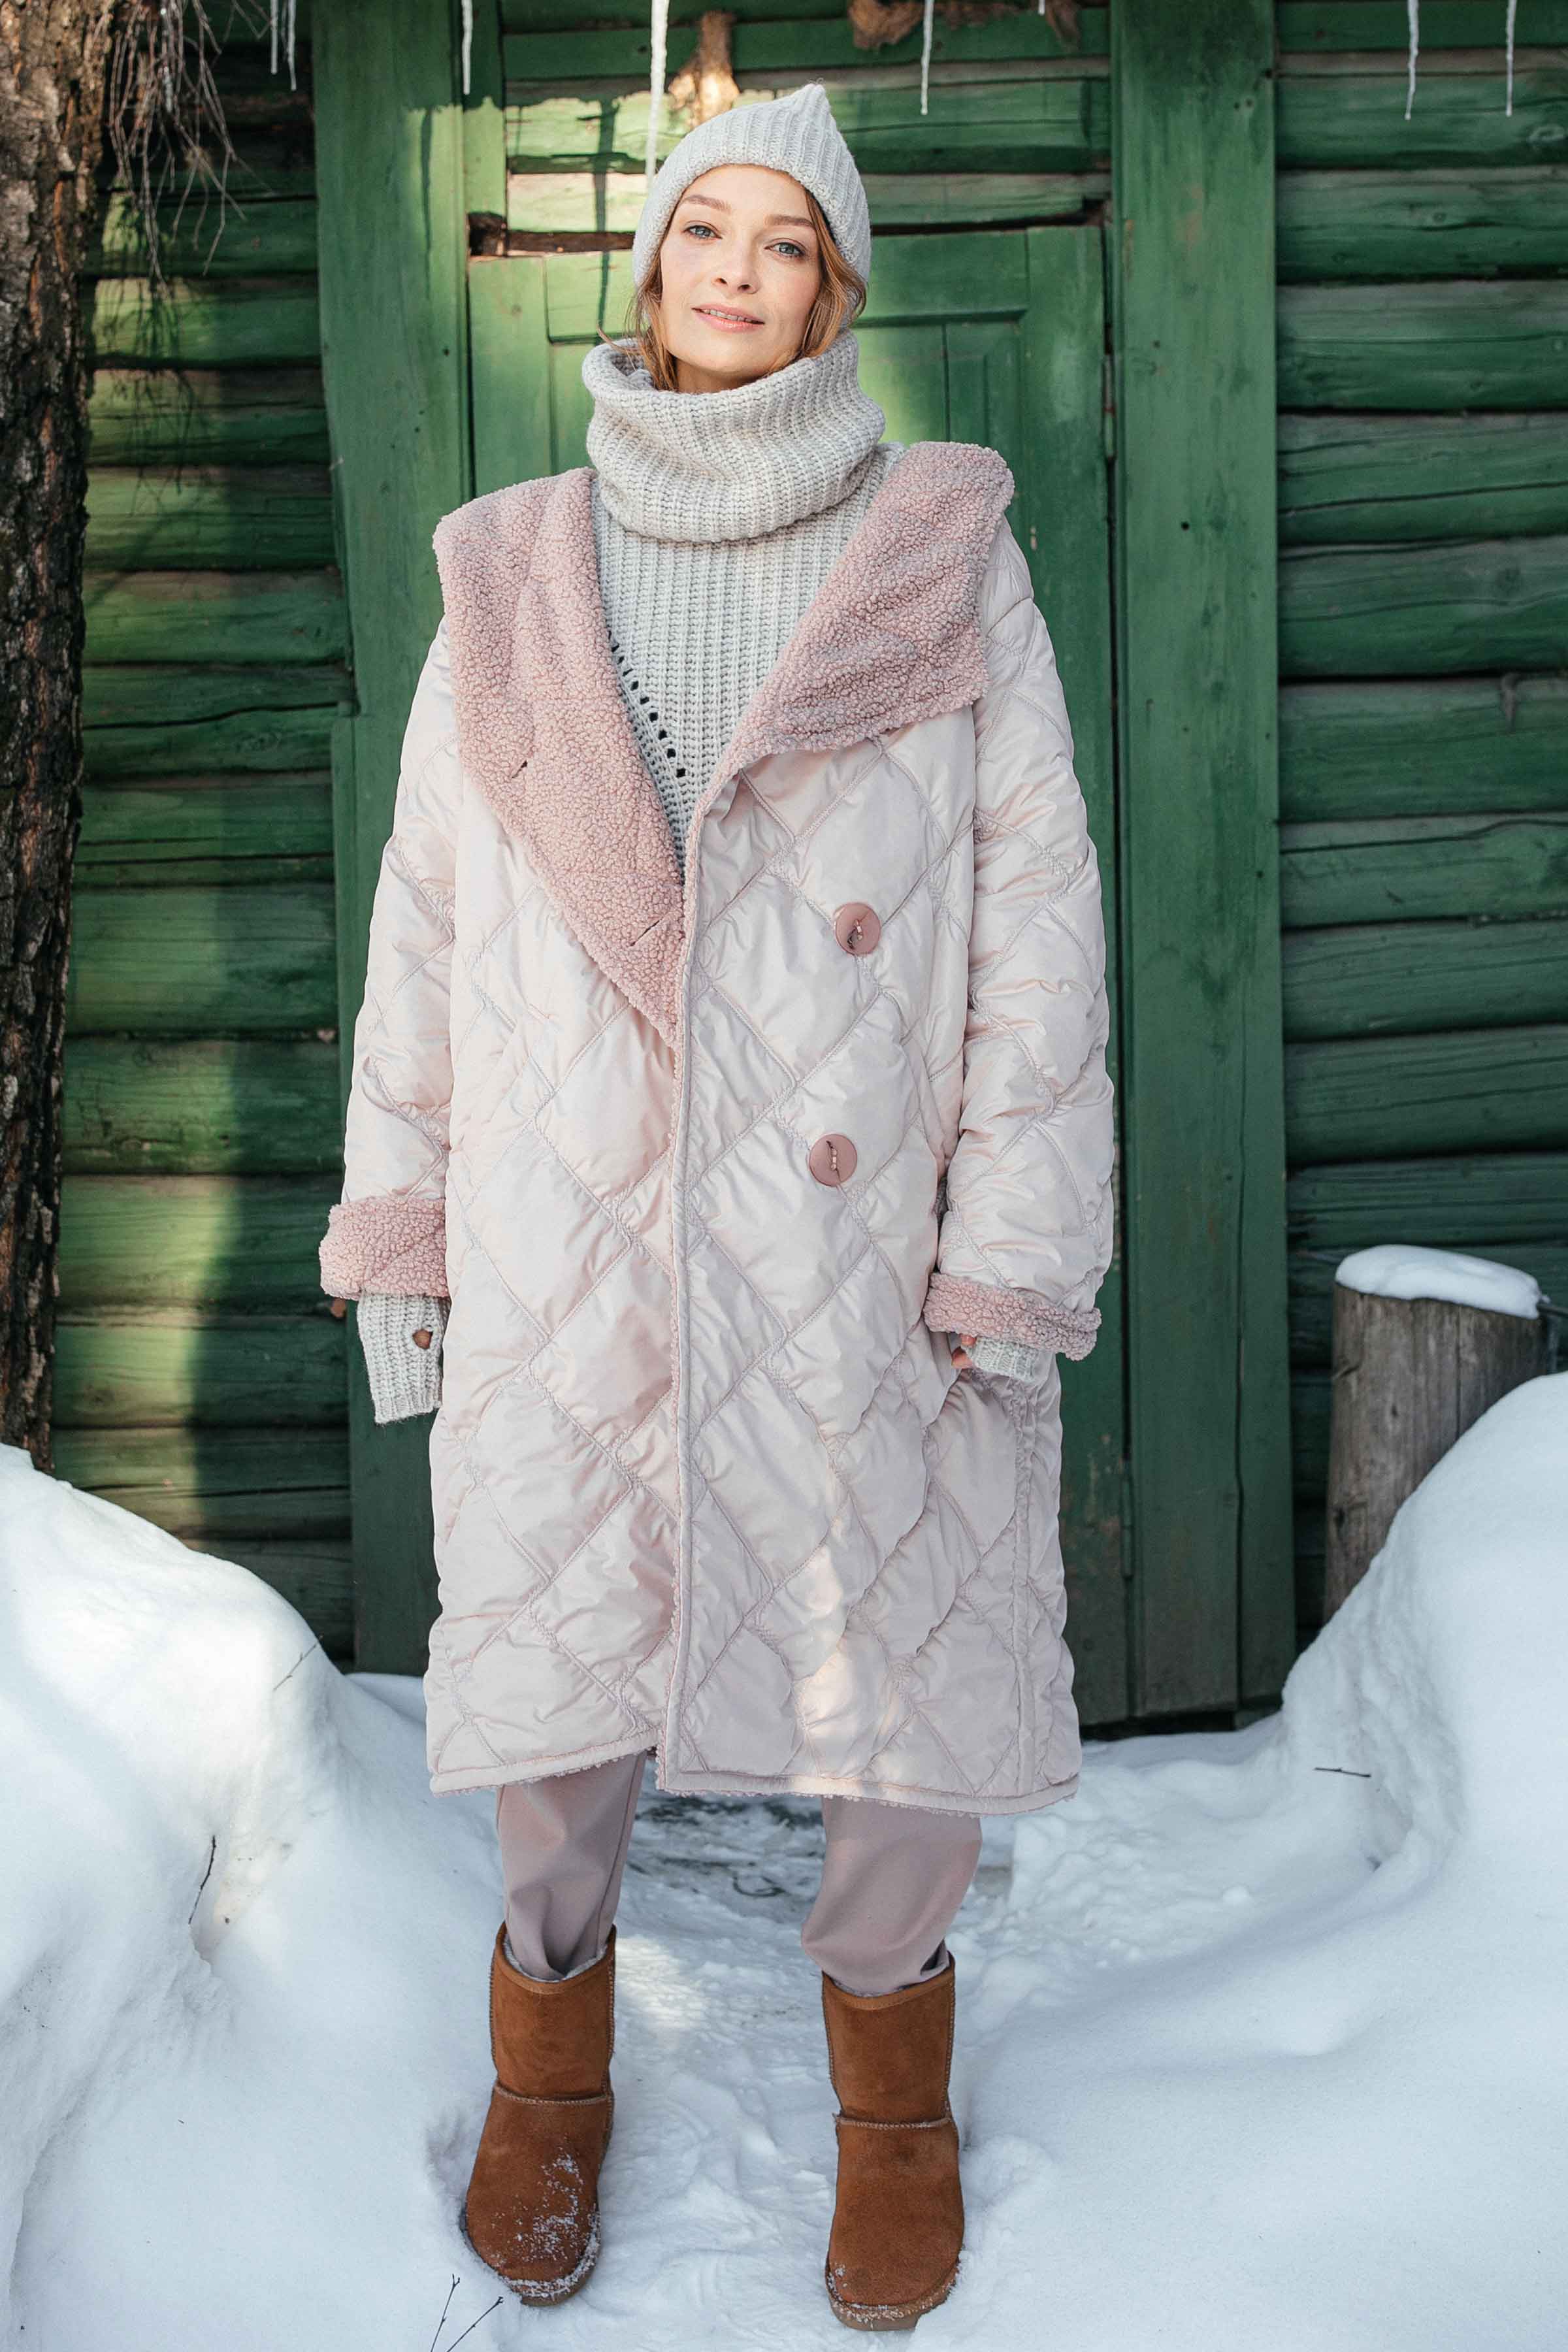 Пальто Стежка мех с капюшоном 41 Розовый мрамор (marbre rose) от Lesel (Лесель)! Заказывайте по ✆ 8 (800) 777 02 37